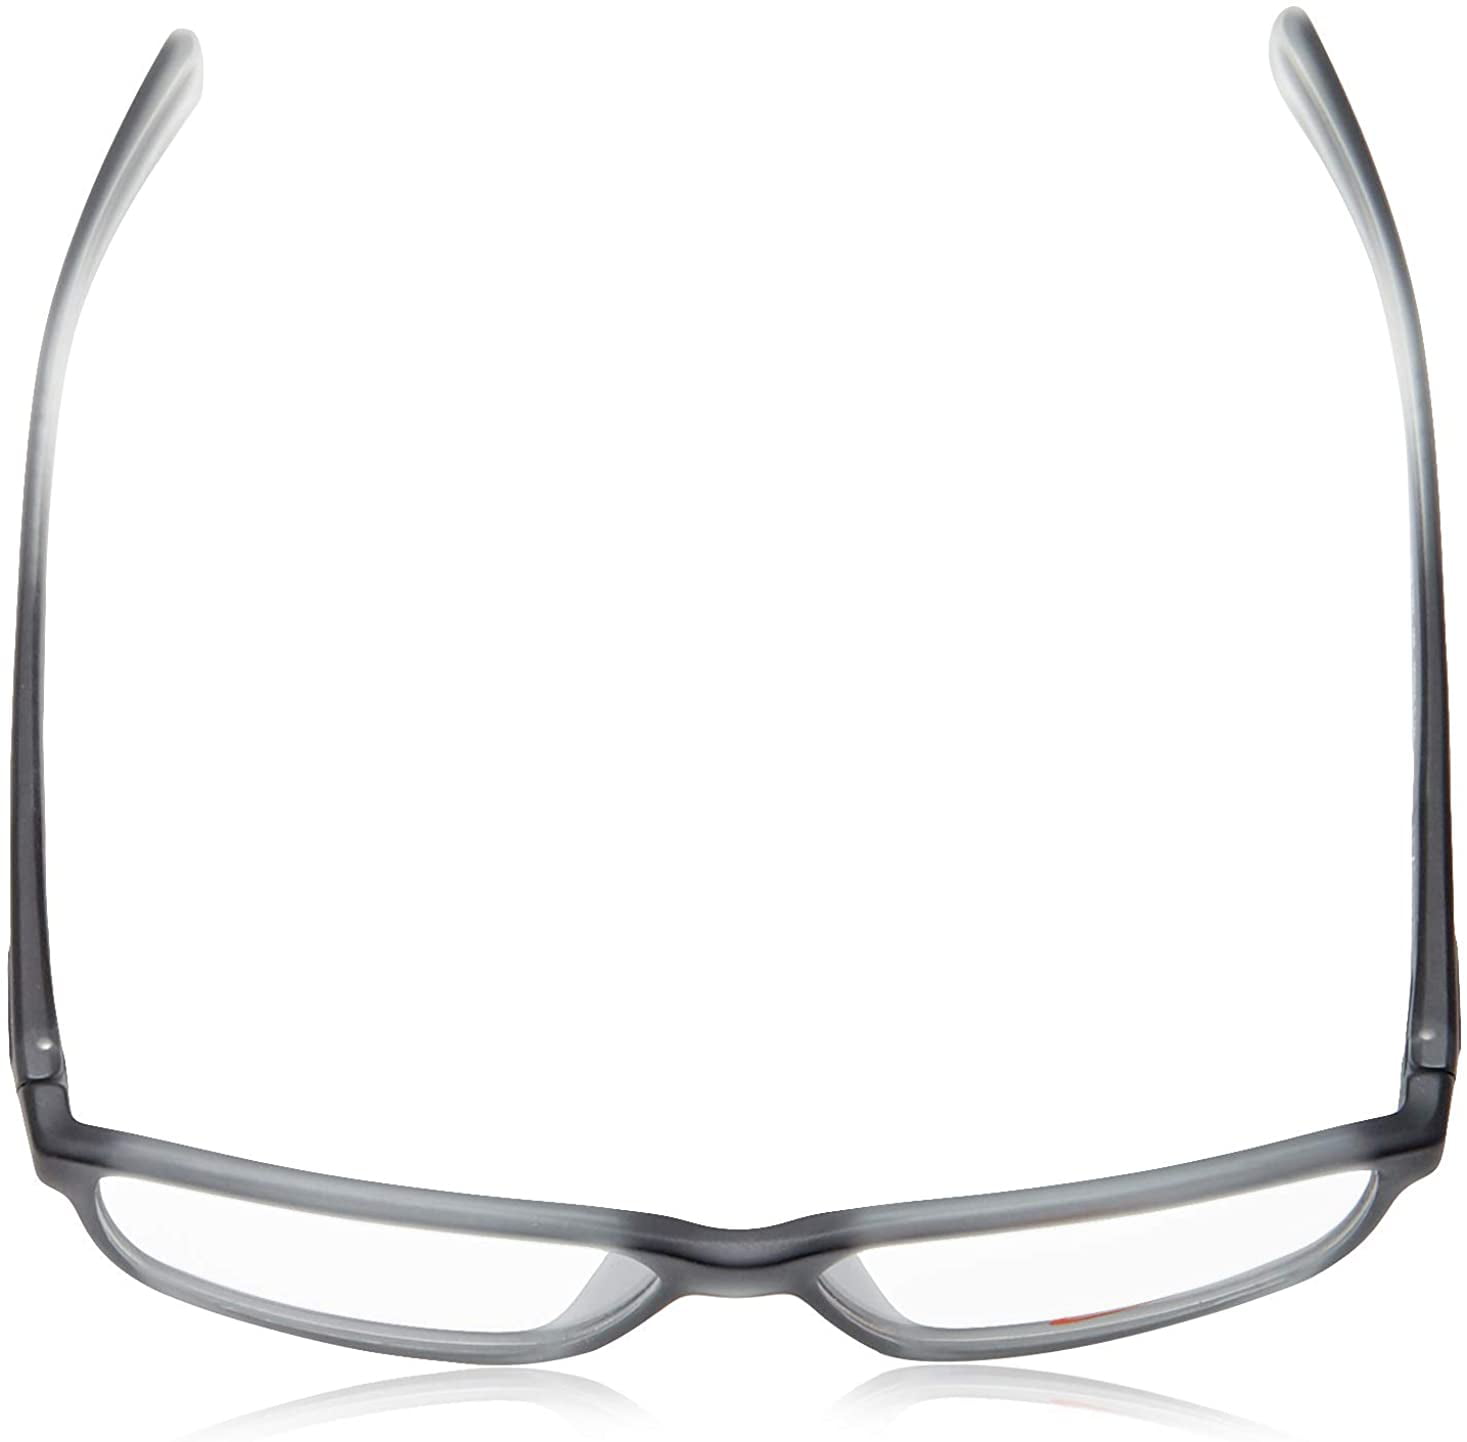 7092 Eyeglasses - Walmart.com